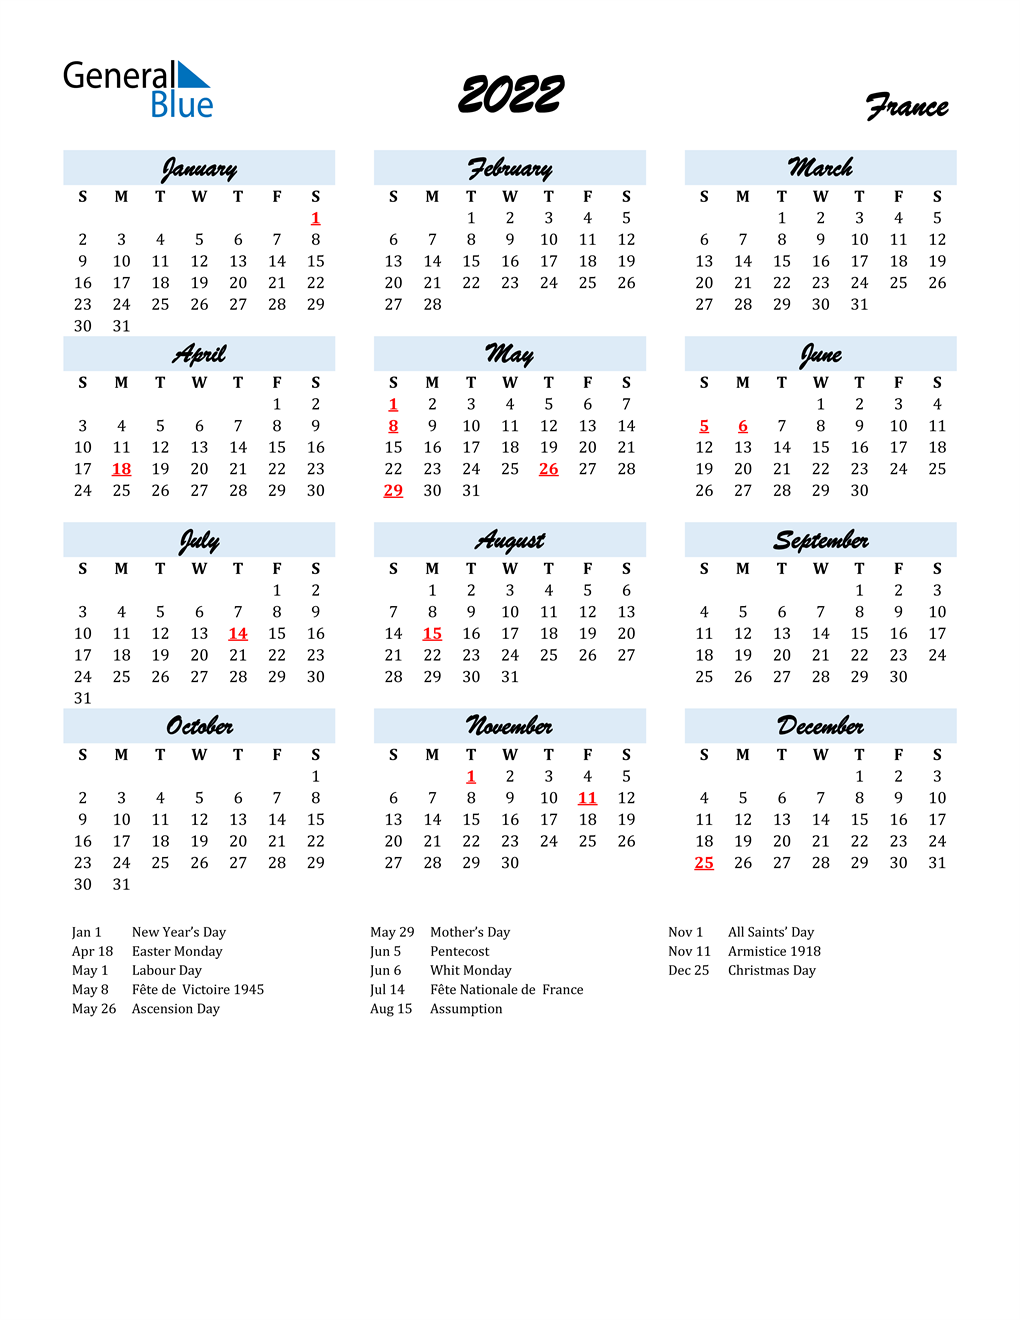 French Calendar 2022 2022 France Calendar With Holidays